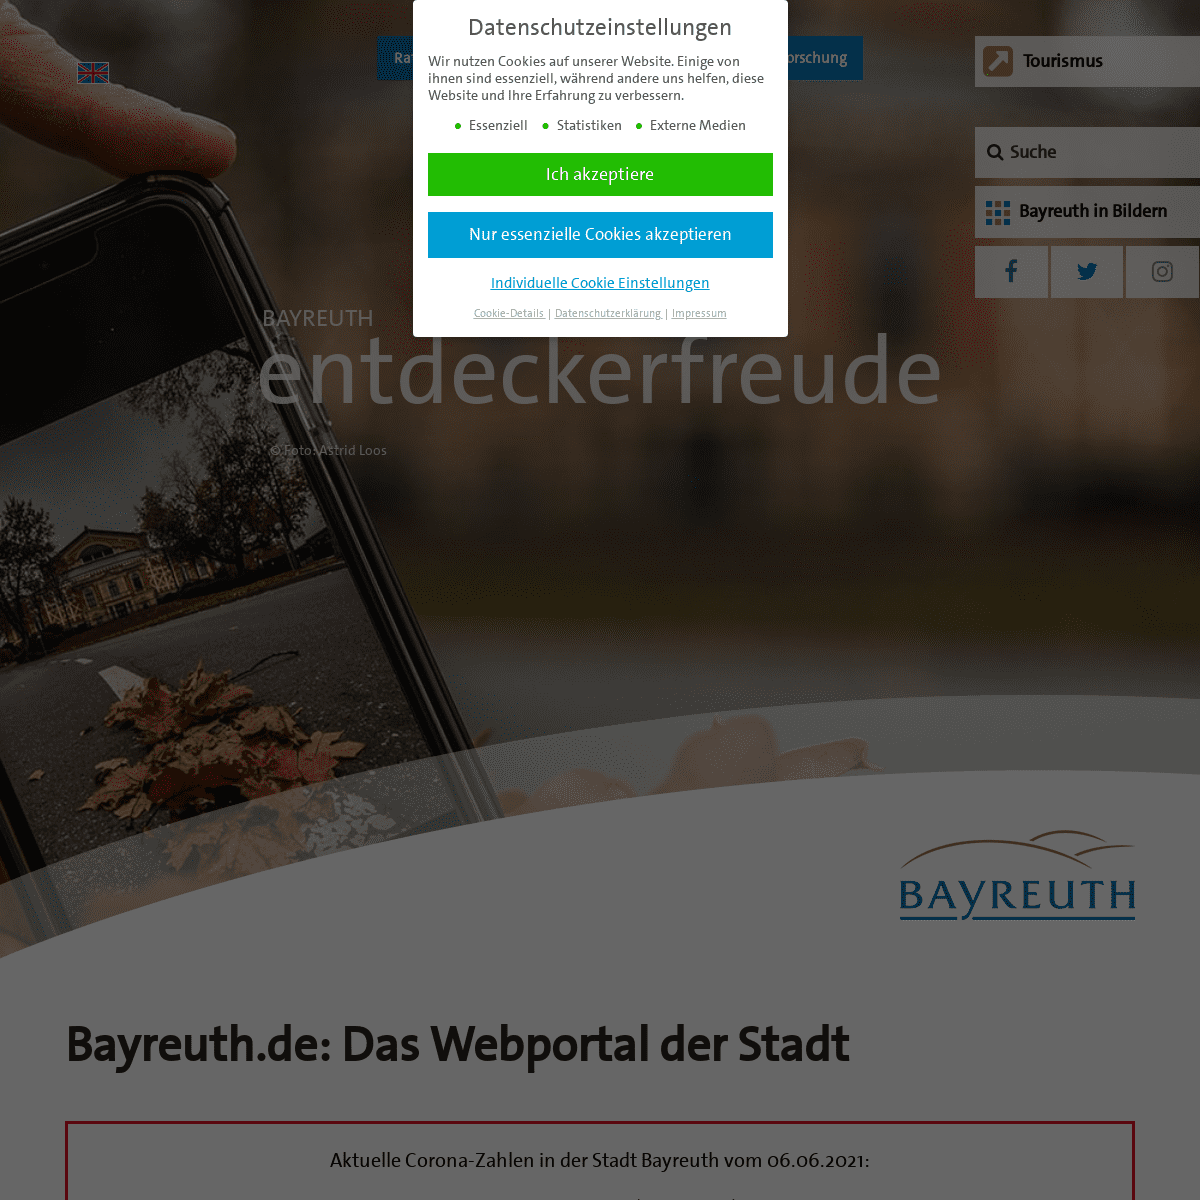 A complete backup of https://bayreuth.de